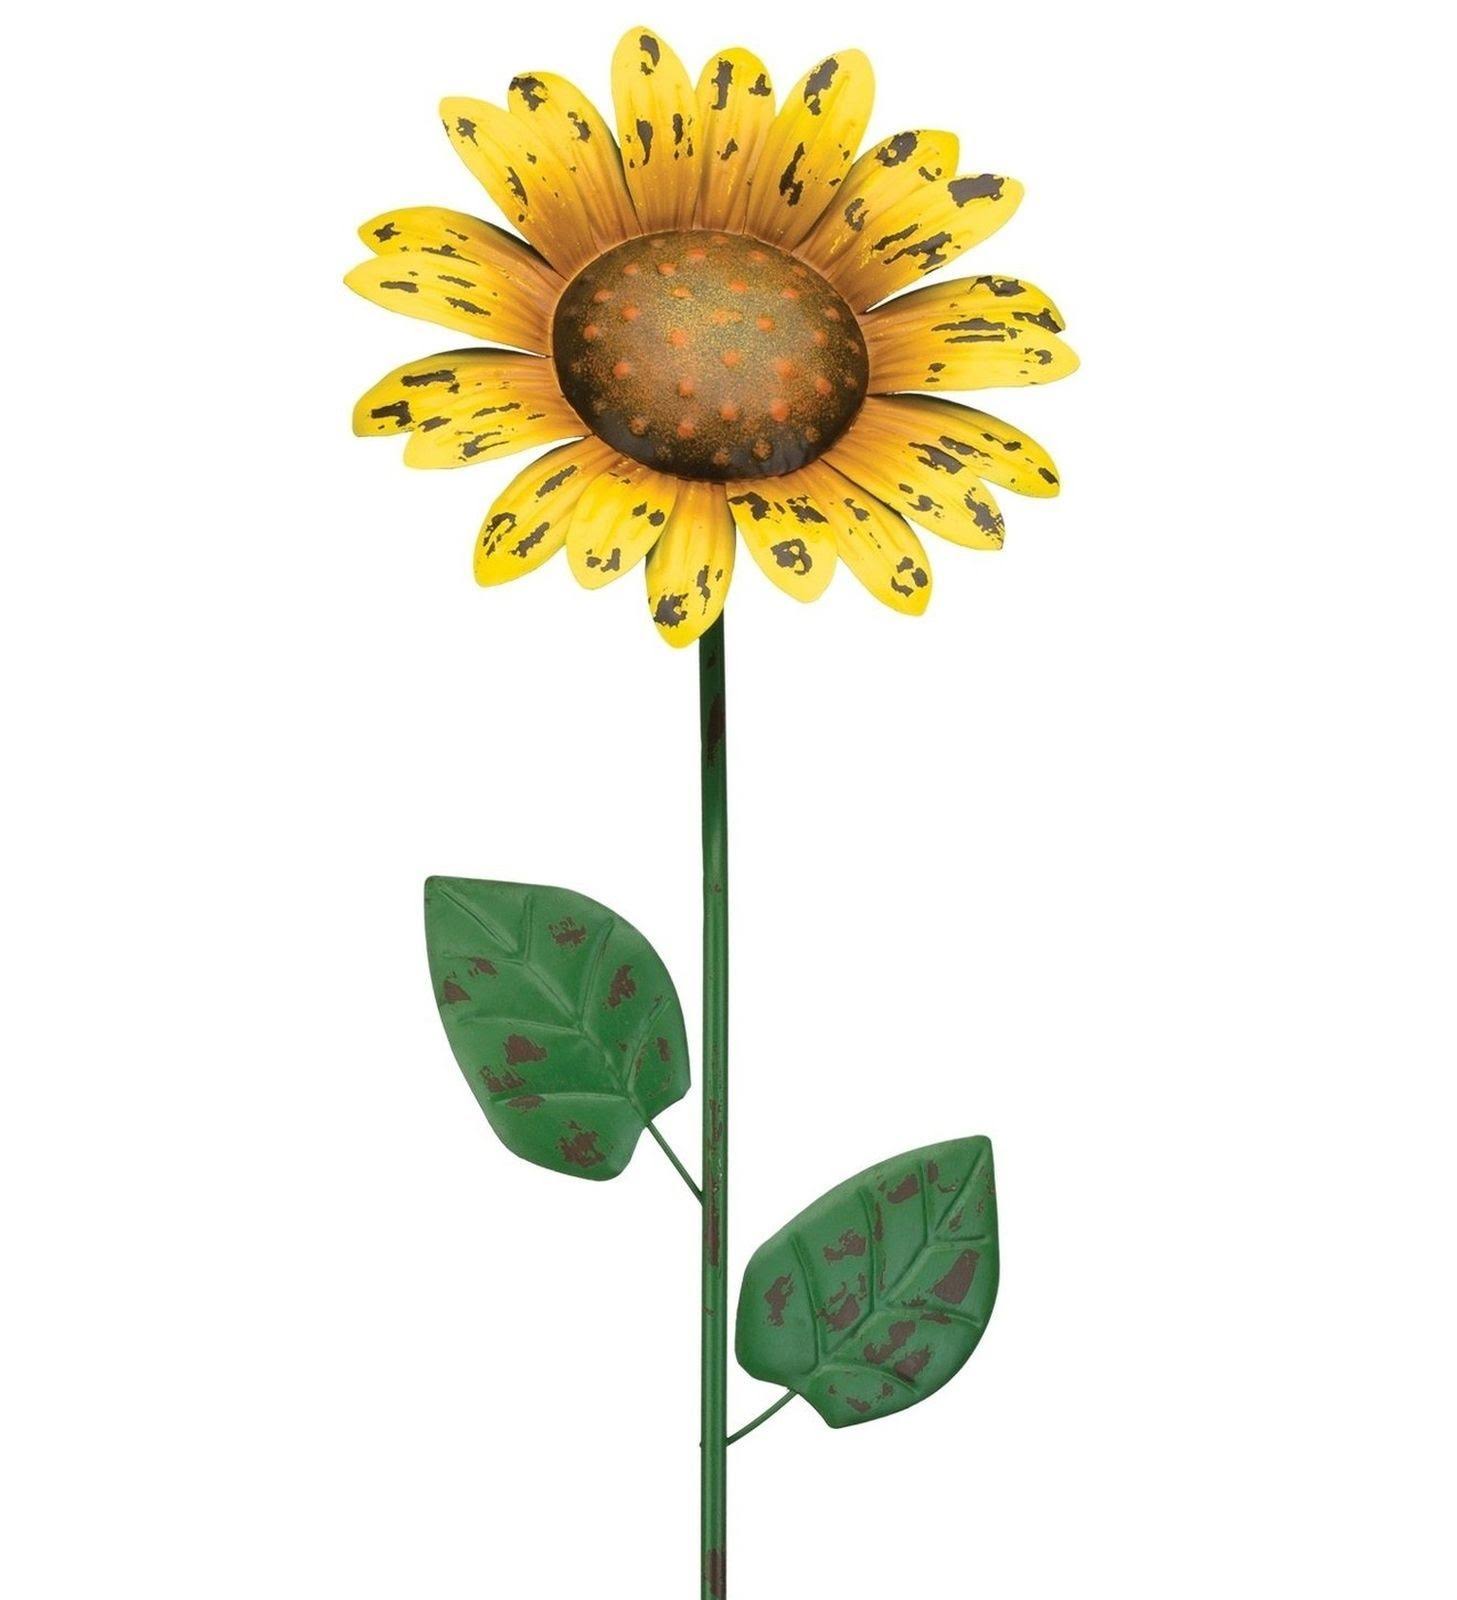 Regal Art & Gift 36" Rustic Sunflower Flower Stake